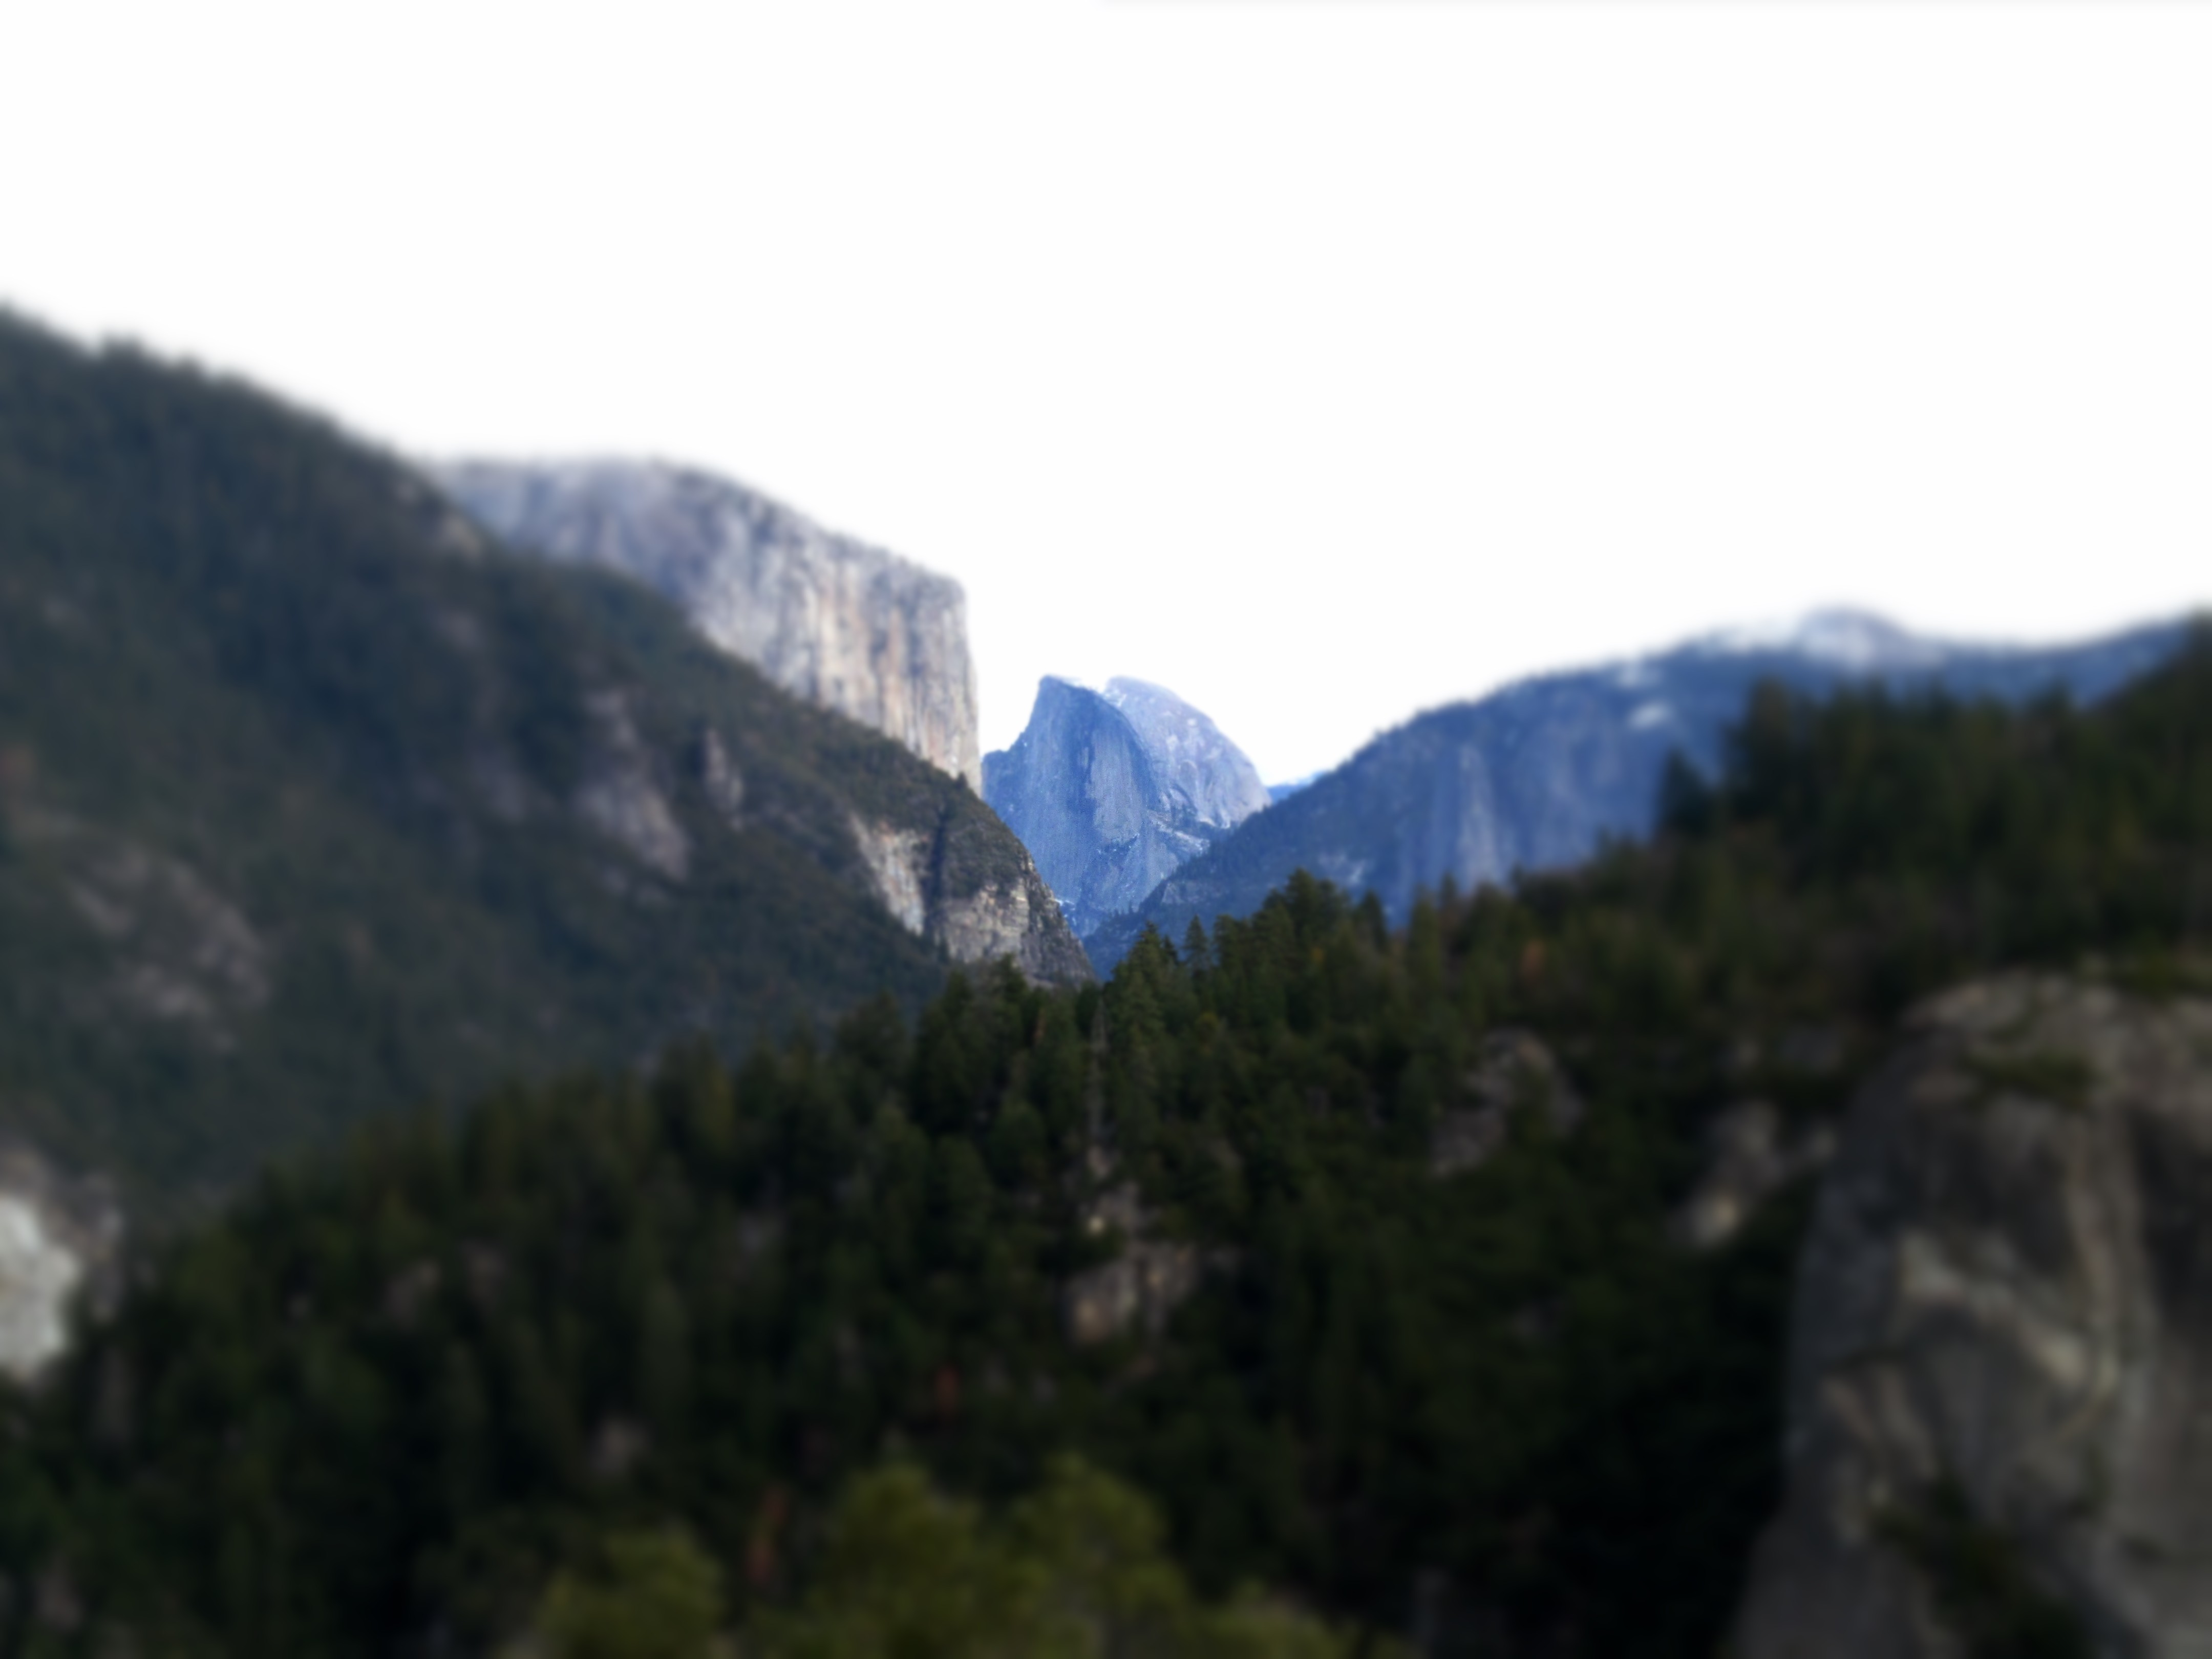 General 4320x3240 California landscape Yosemite National Park El Capitan nature USA